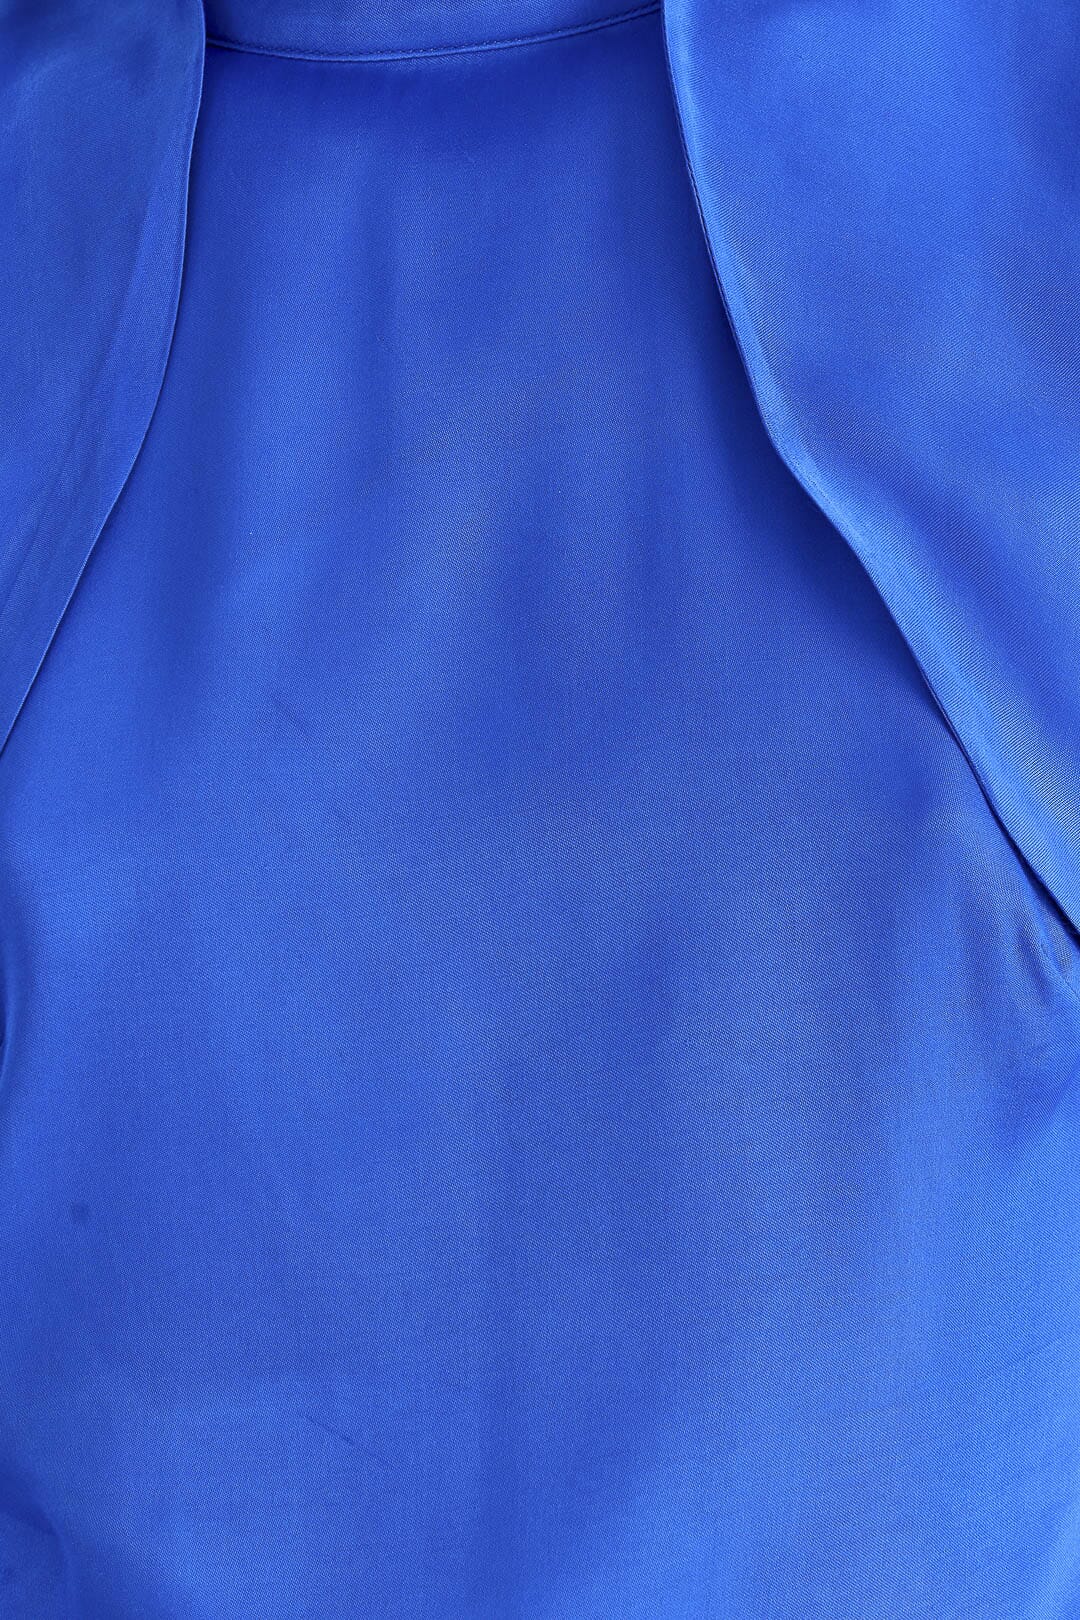 Mini-robe bleu vif dos nu à manches volantées